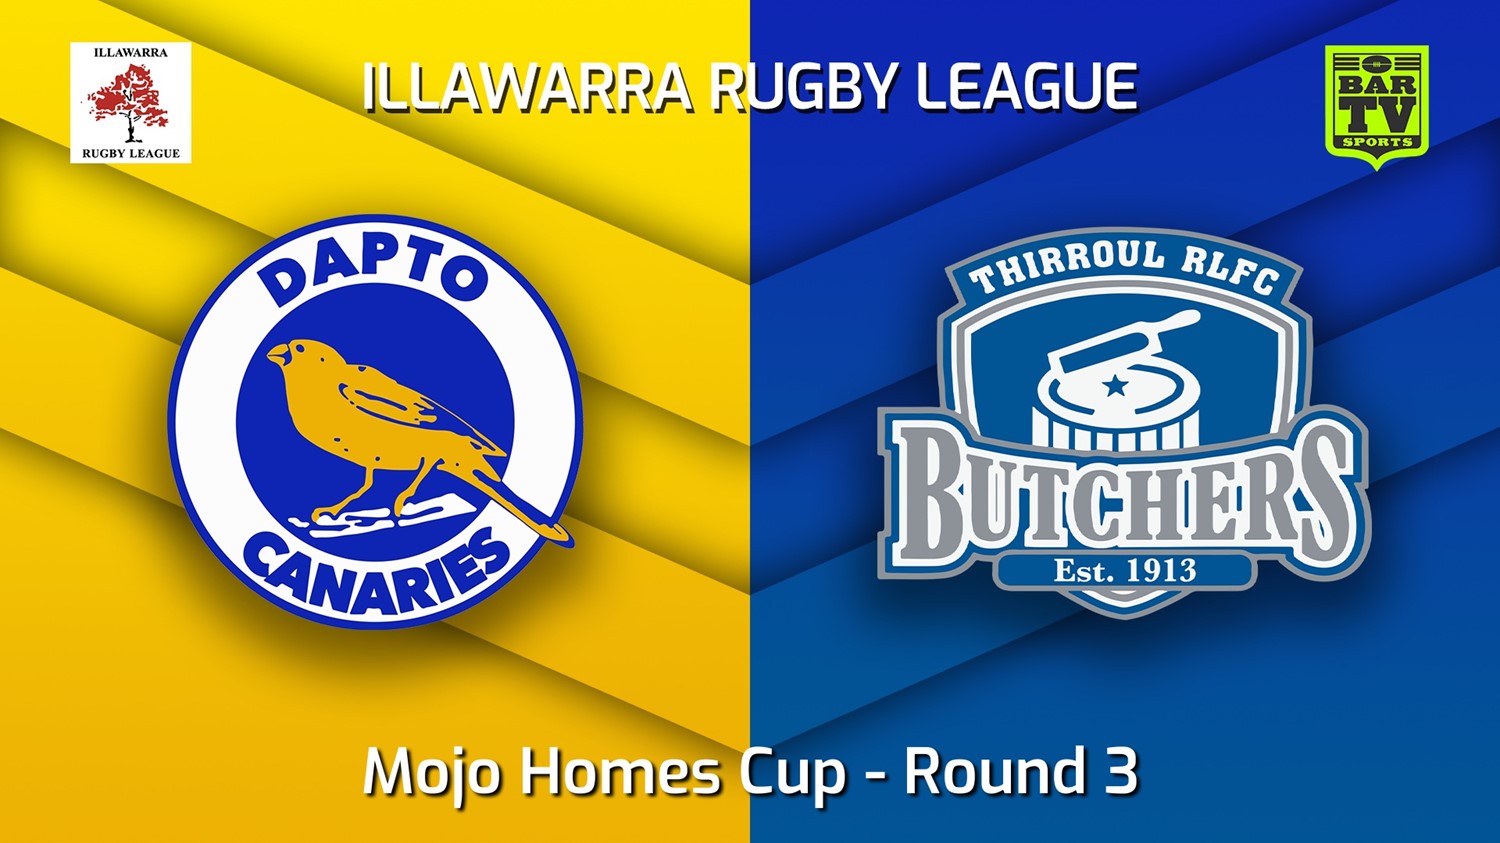 220507-Illawarra Round 3 - Mojo Homes Cup - Dapto Canaries v Thirroul Butchers Slate Image